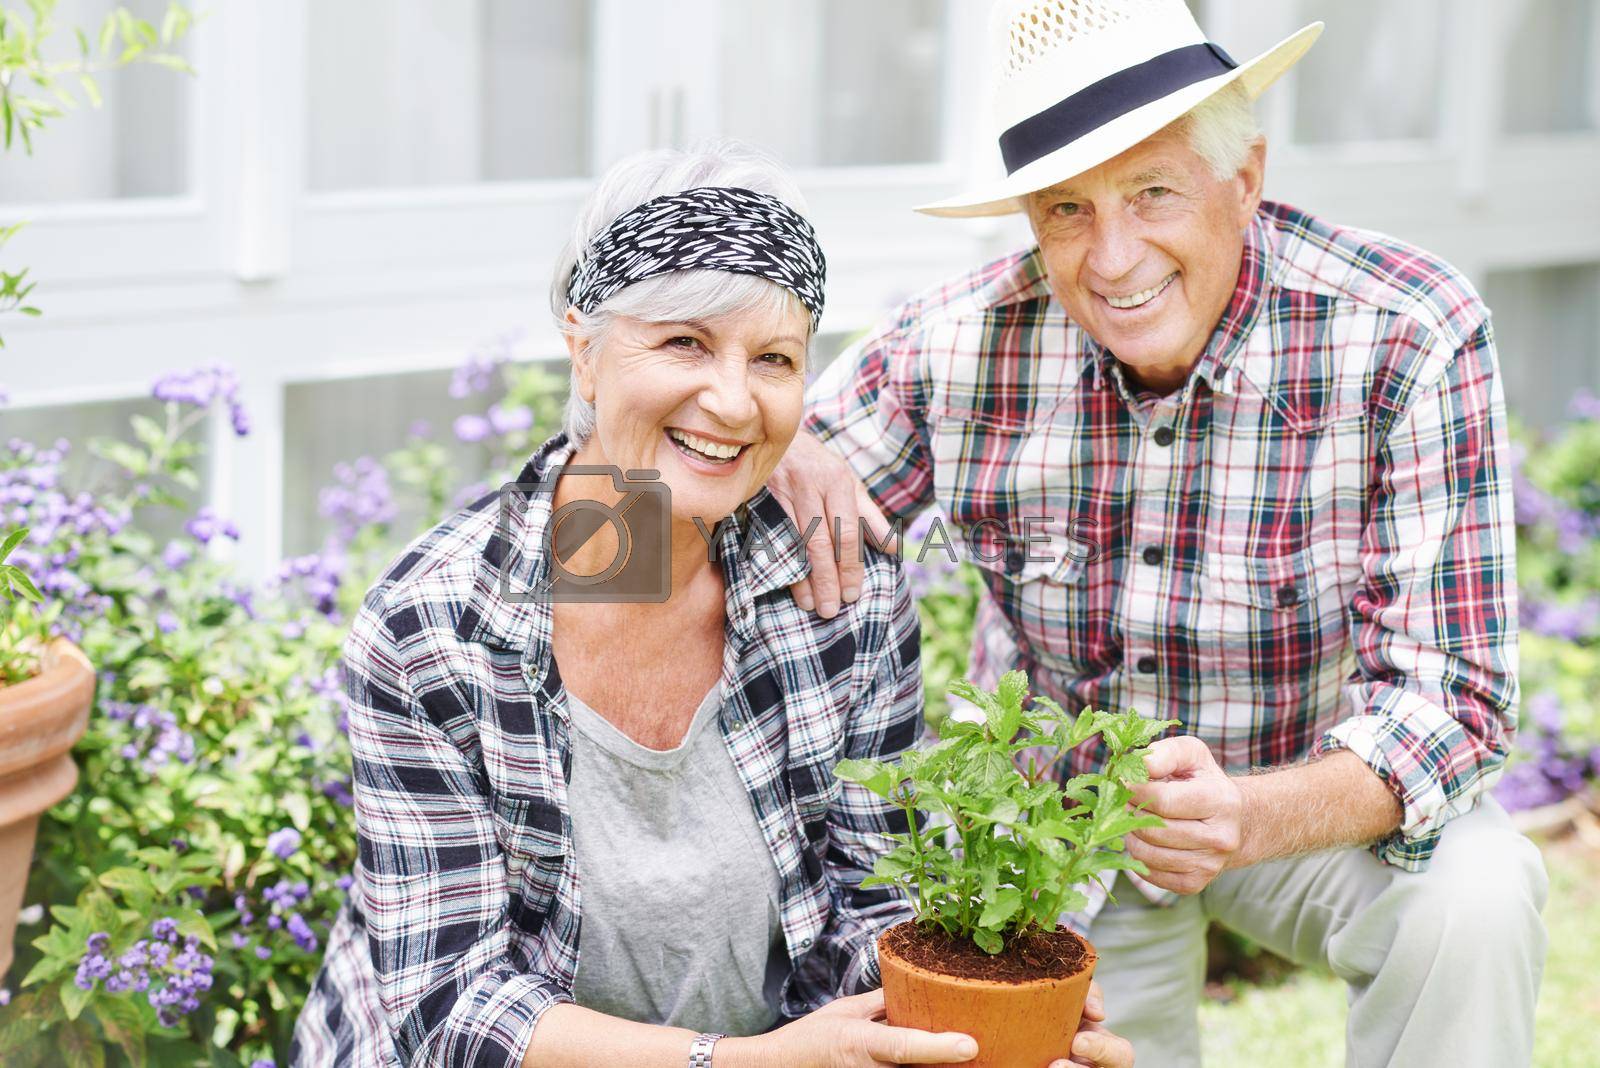 A happy senior couple busy gardening in their back yard.